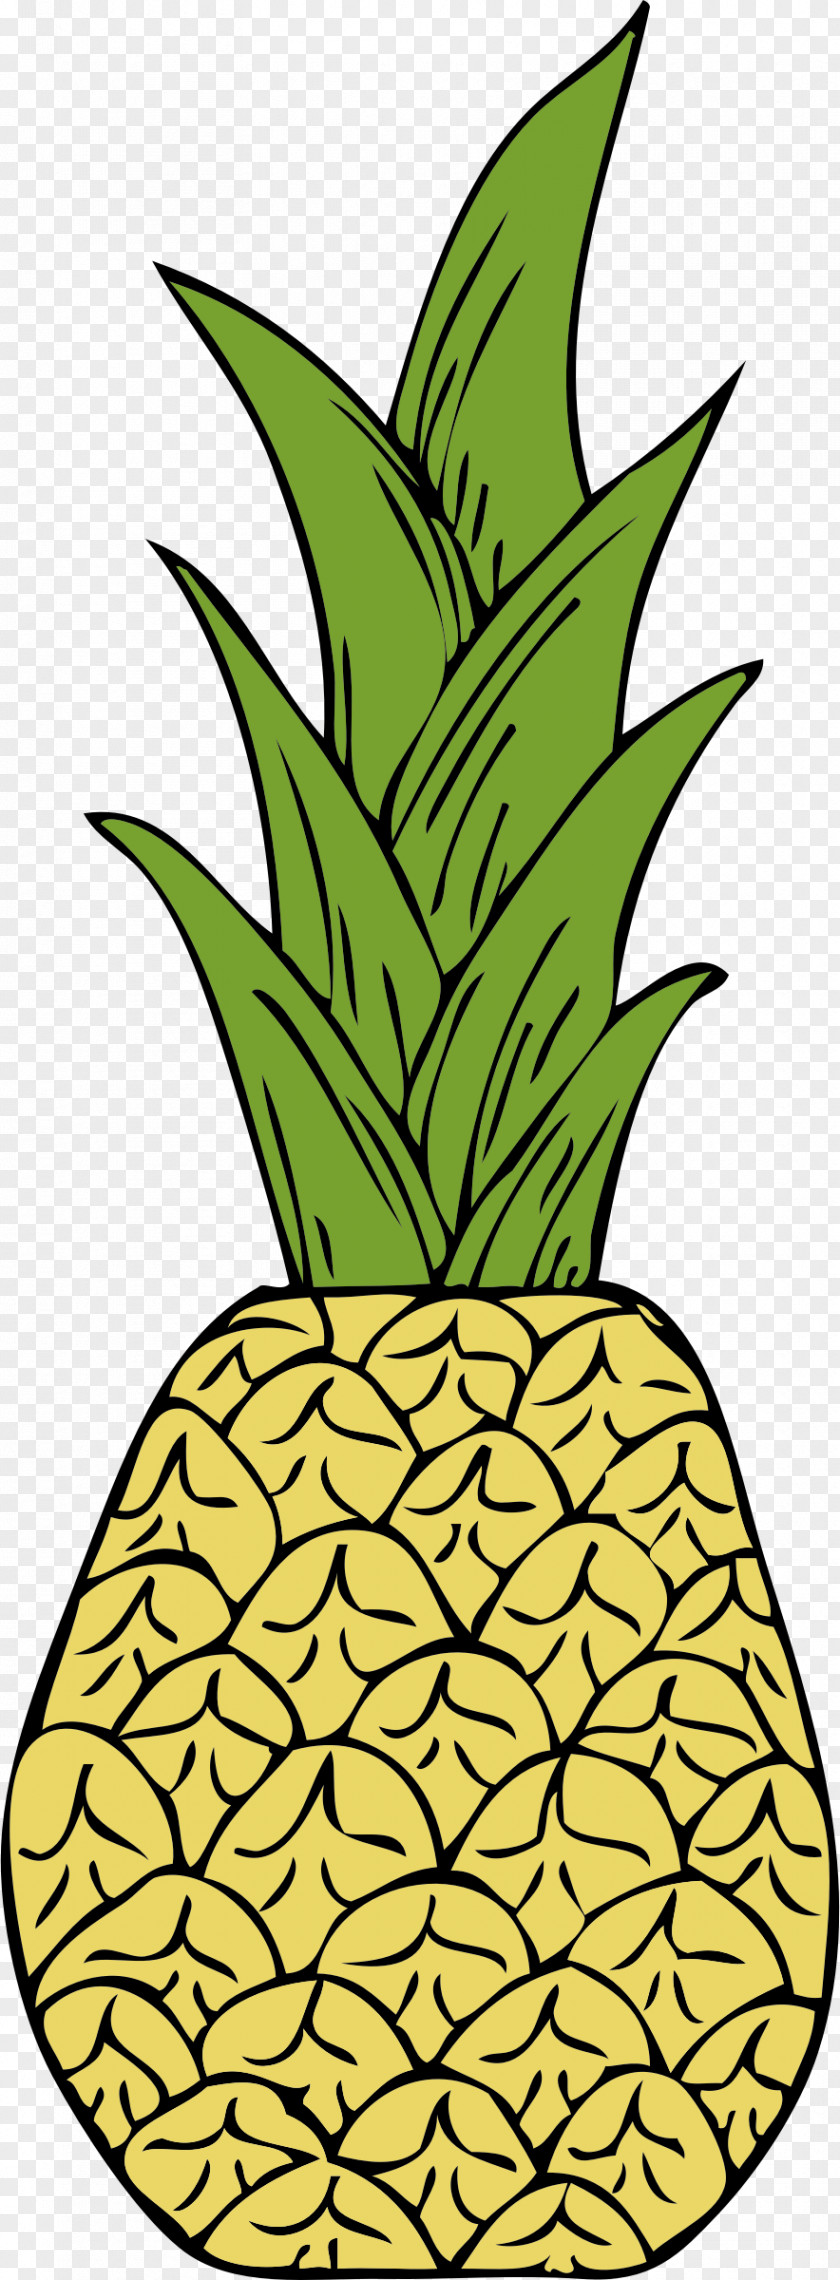 Pineapple Tropical Fruit Clip Art PNG